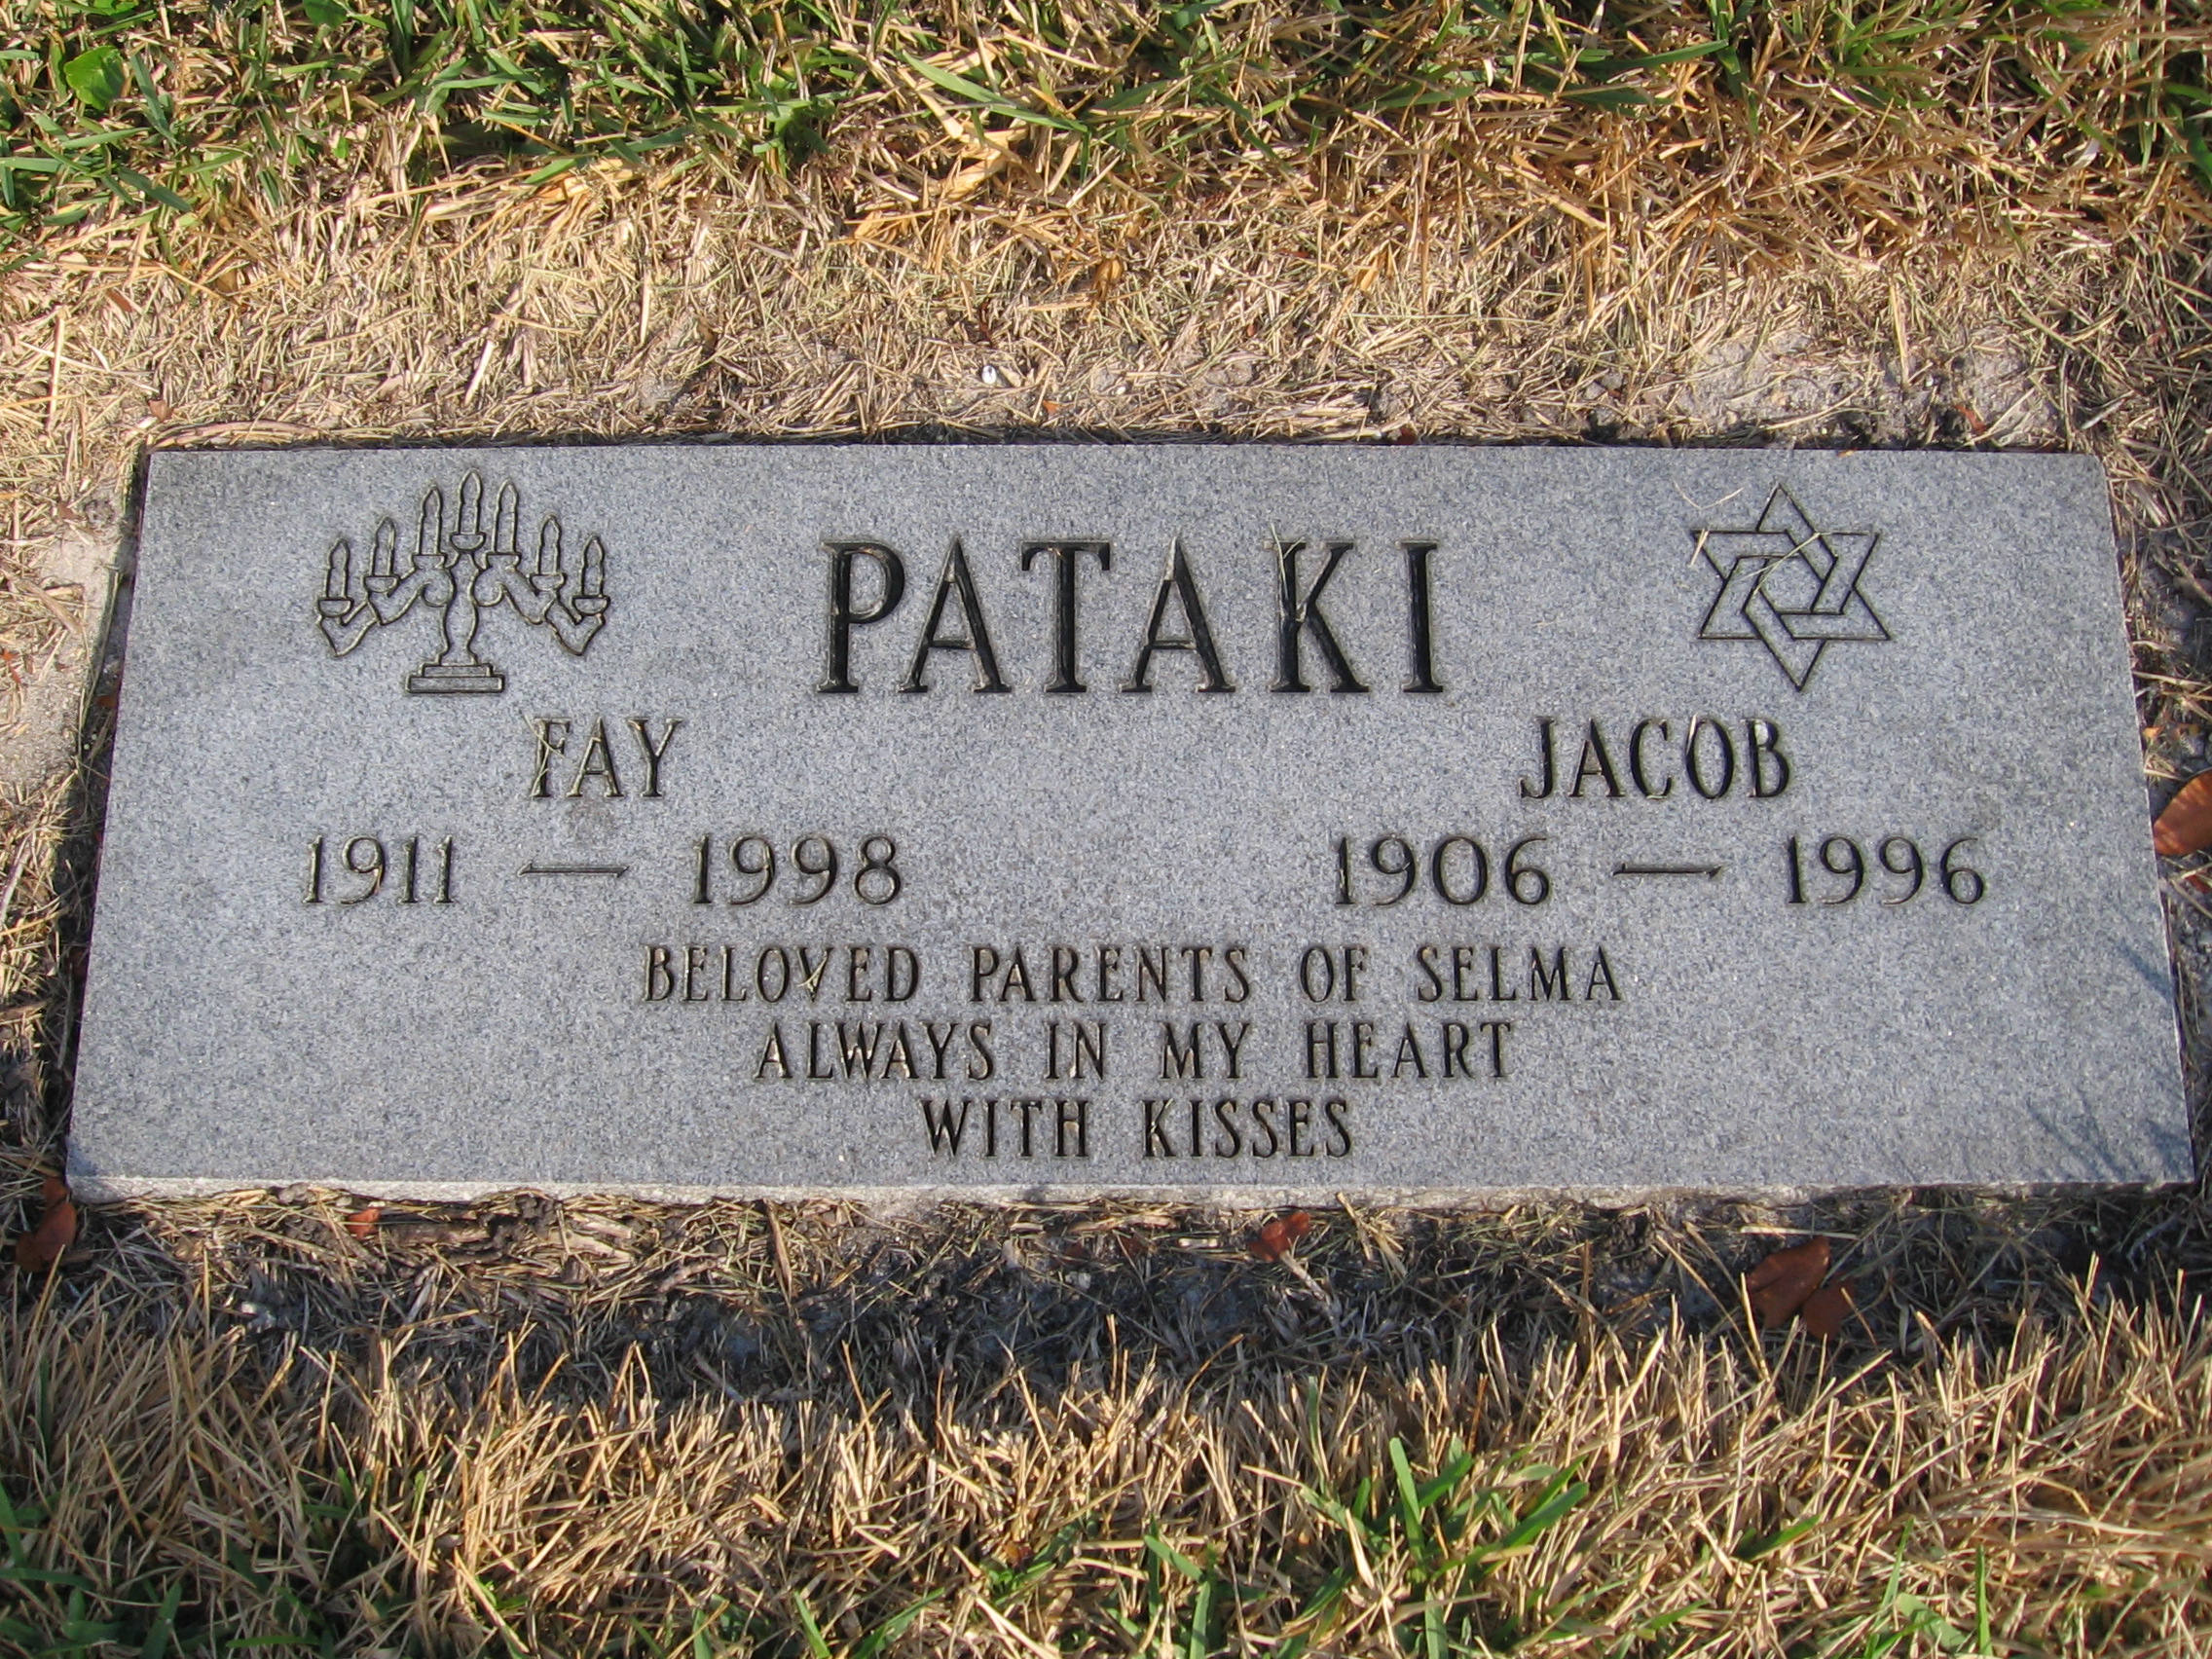 Jacob Pataki